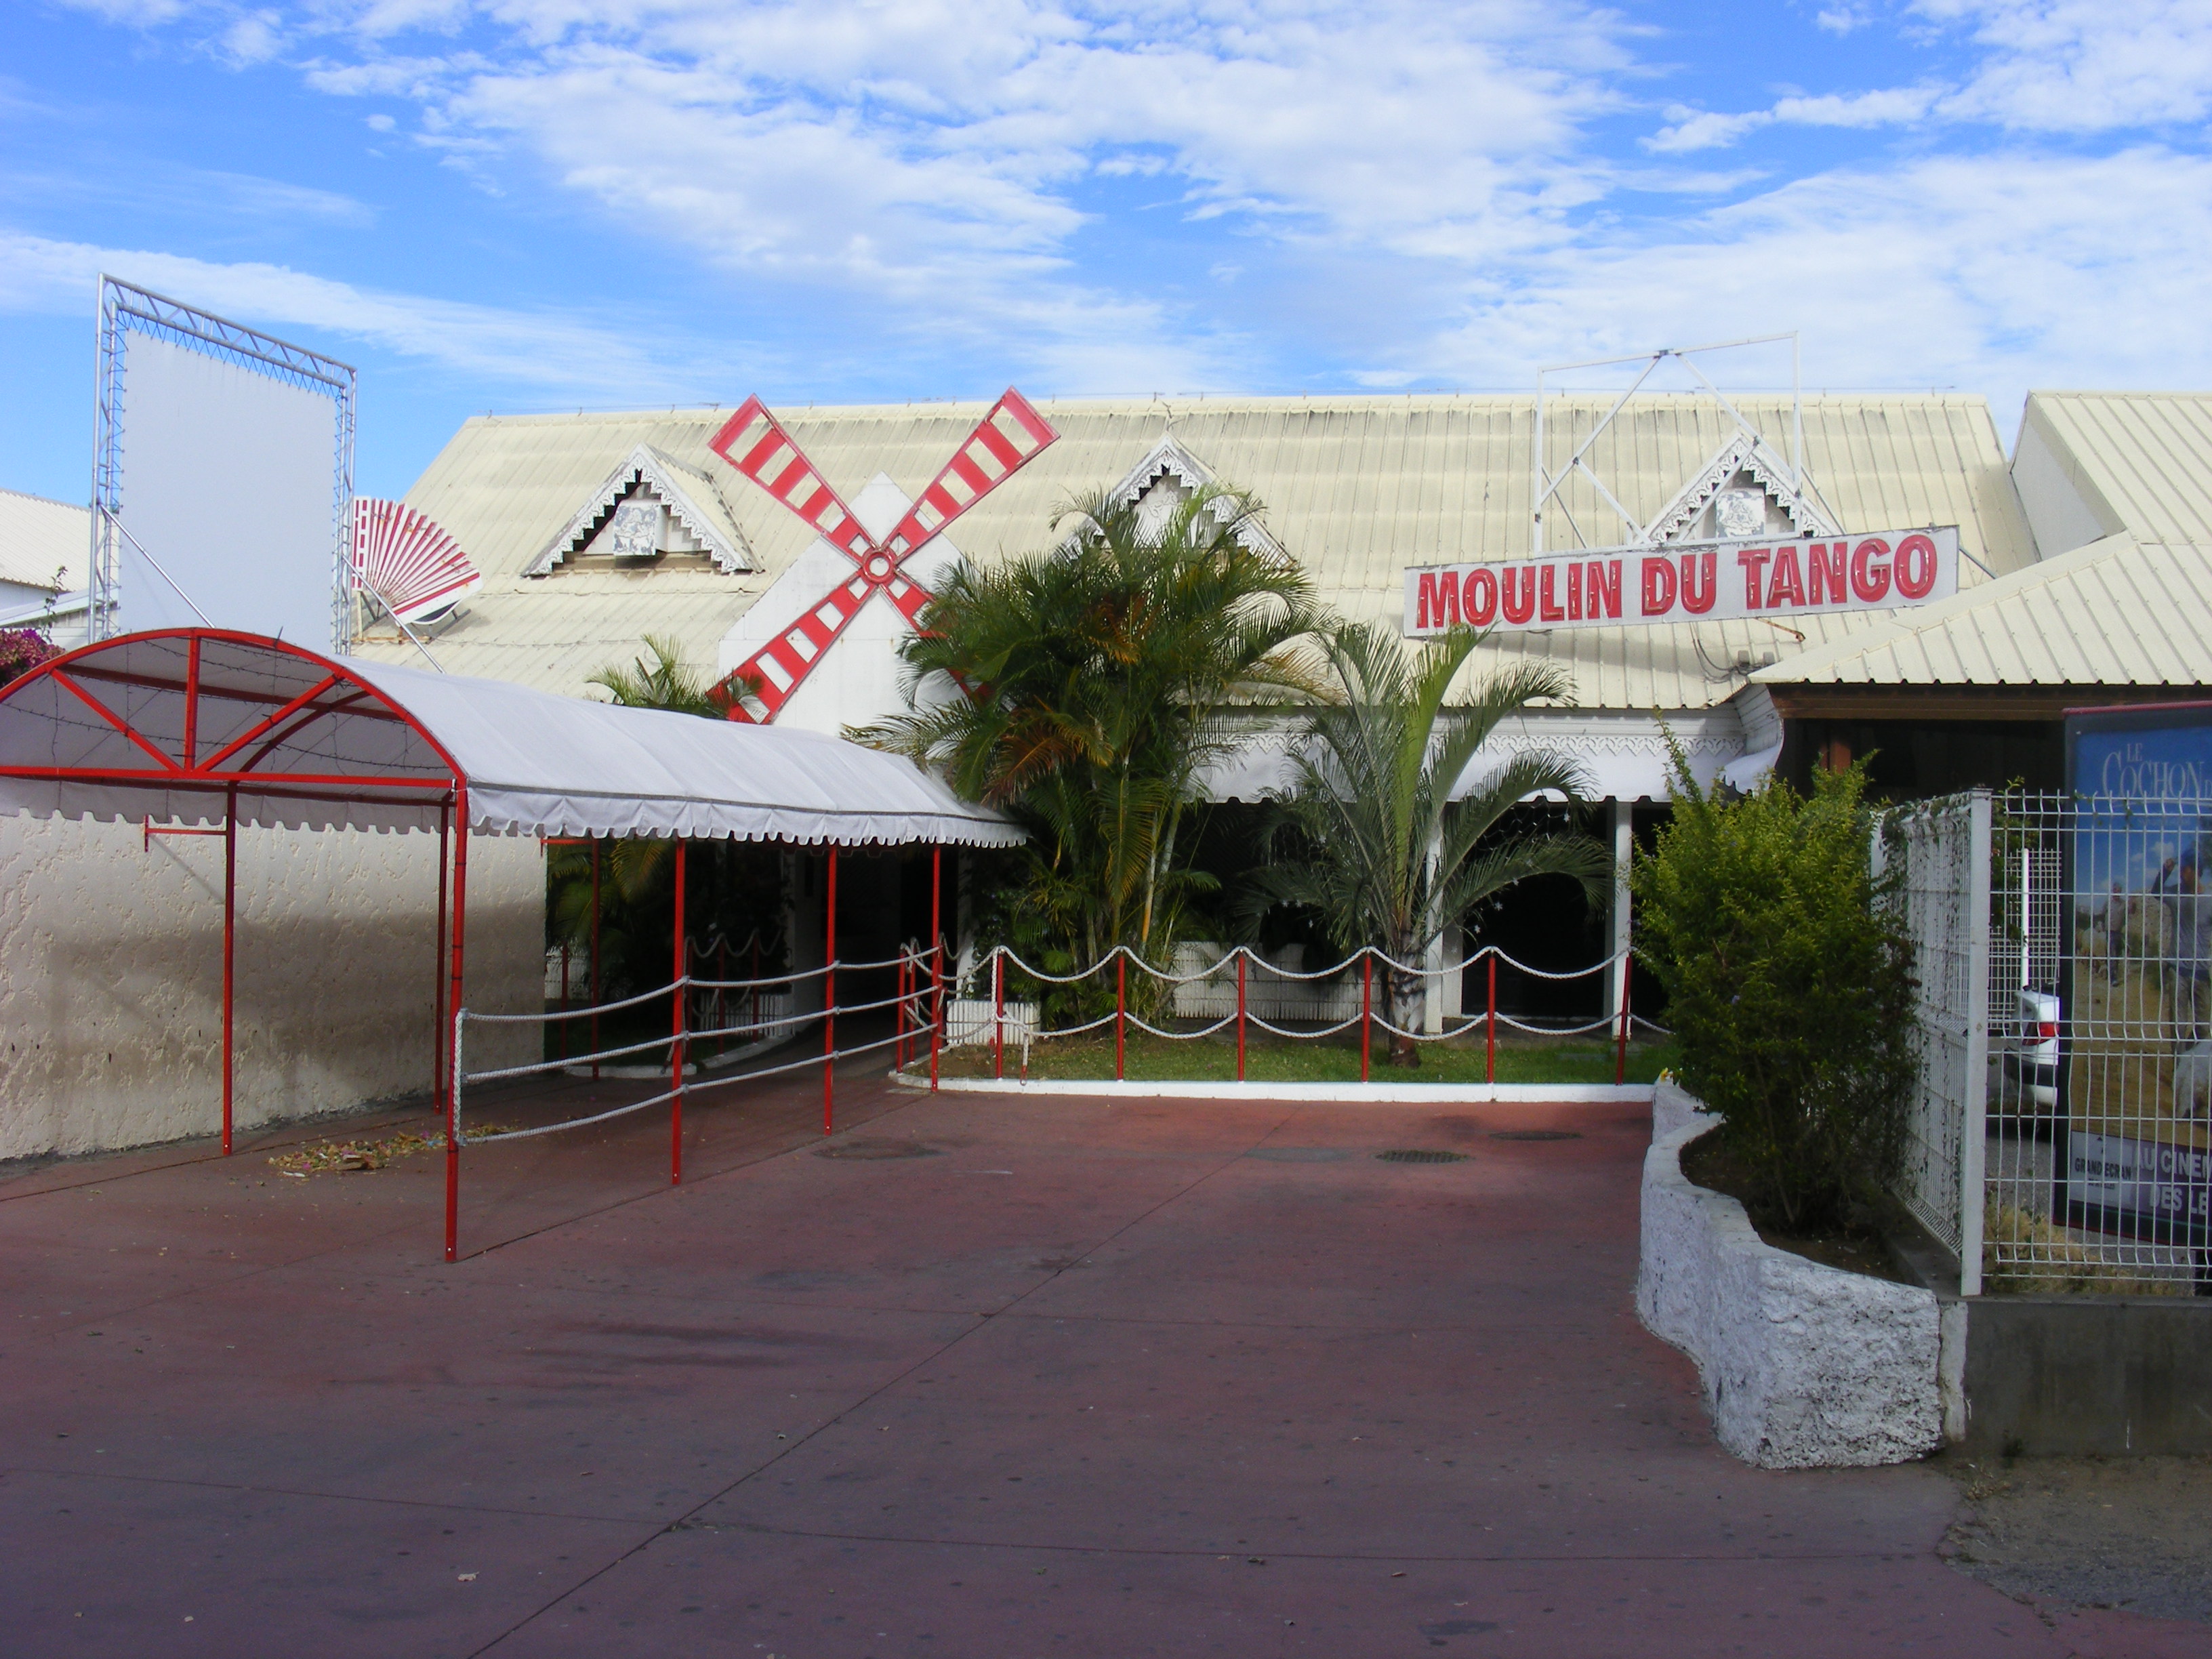 La Moulin du Tango